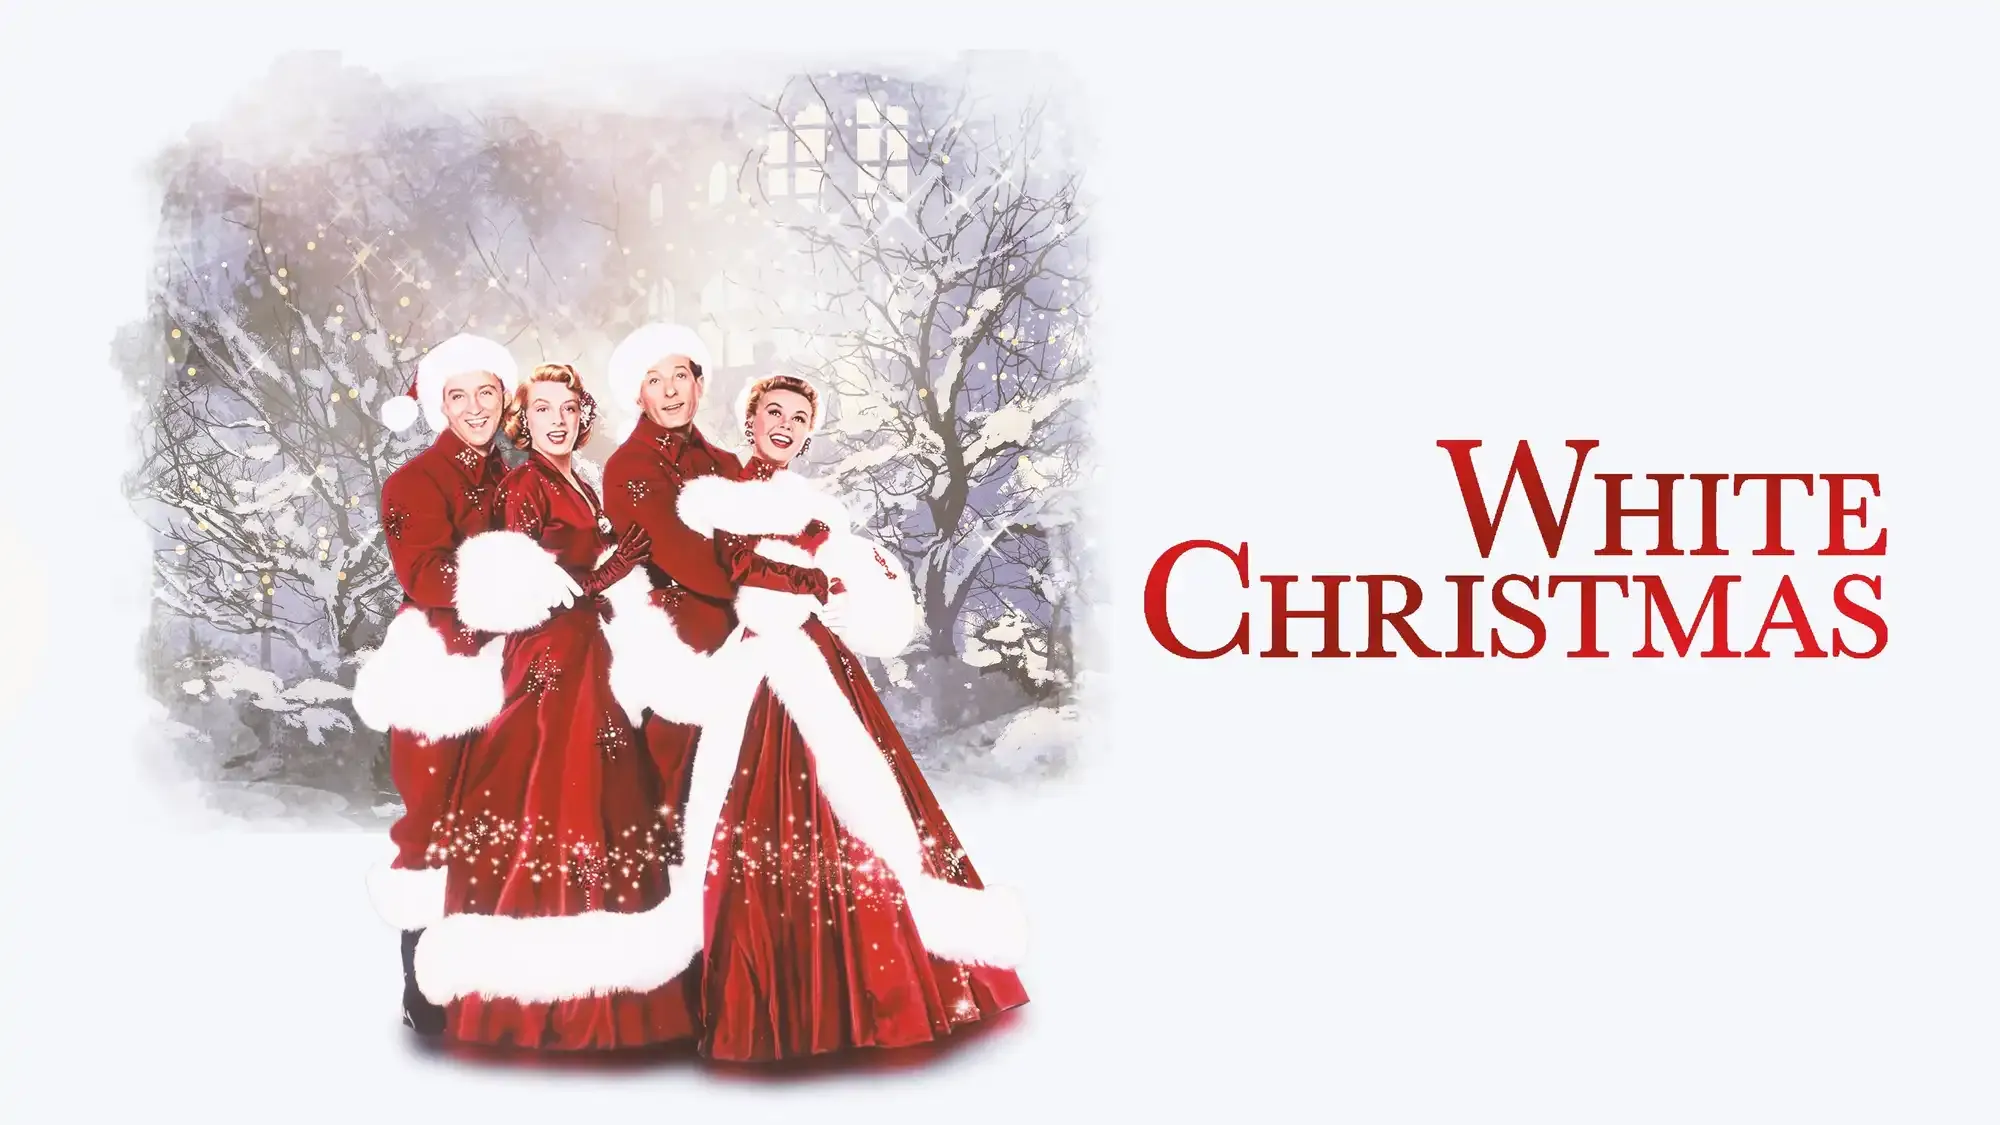 White Christmas movie review